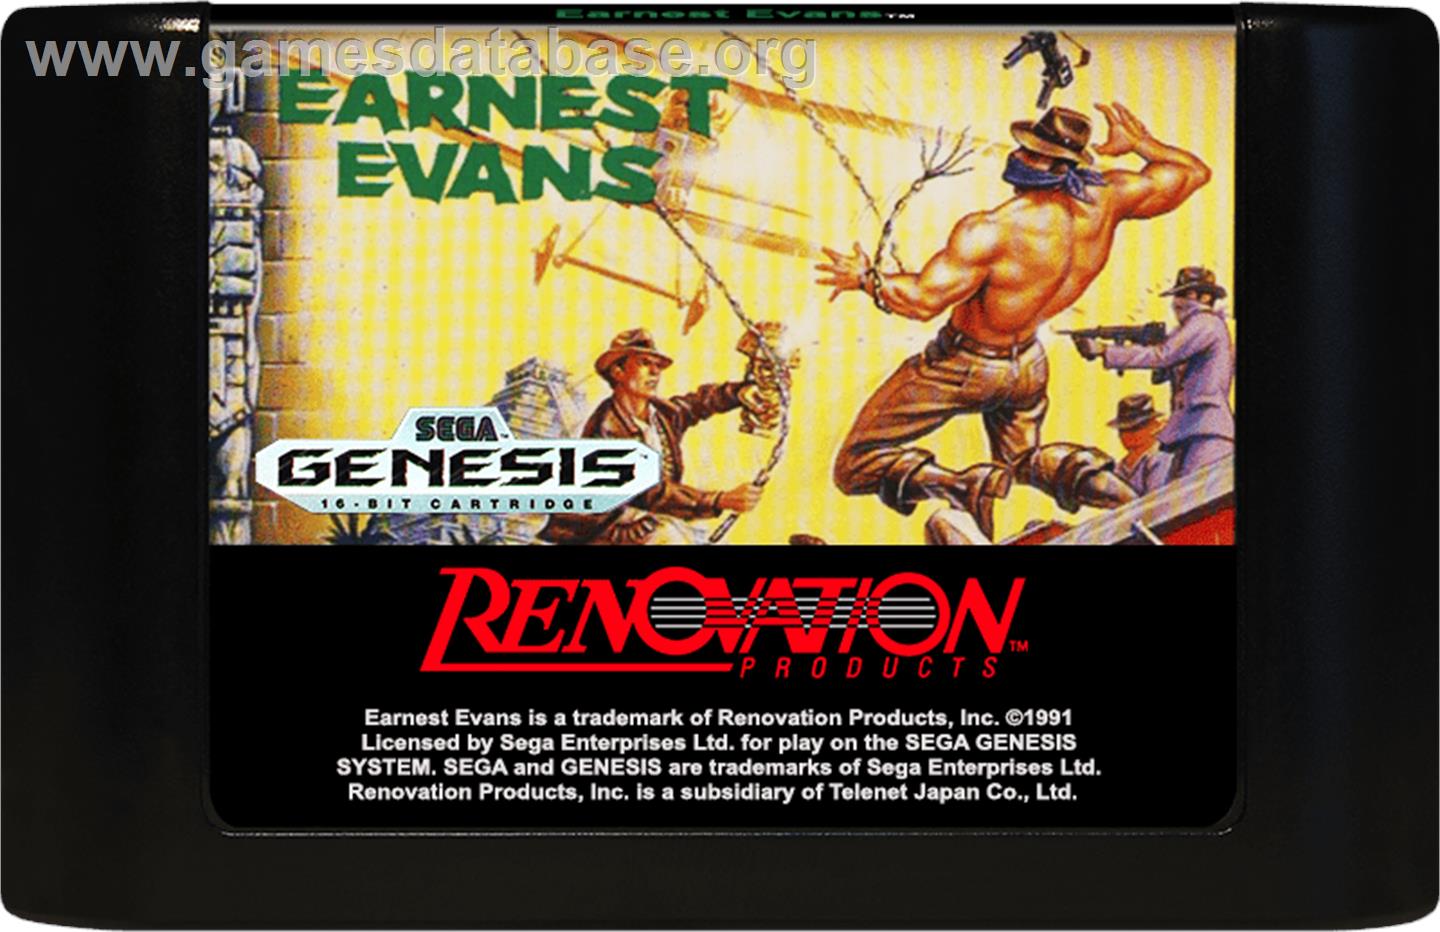 Earnest Evans - Sega Genesis - Artwork - Cartridge